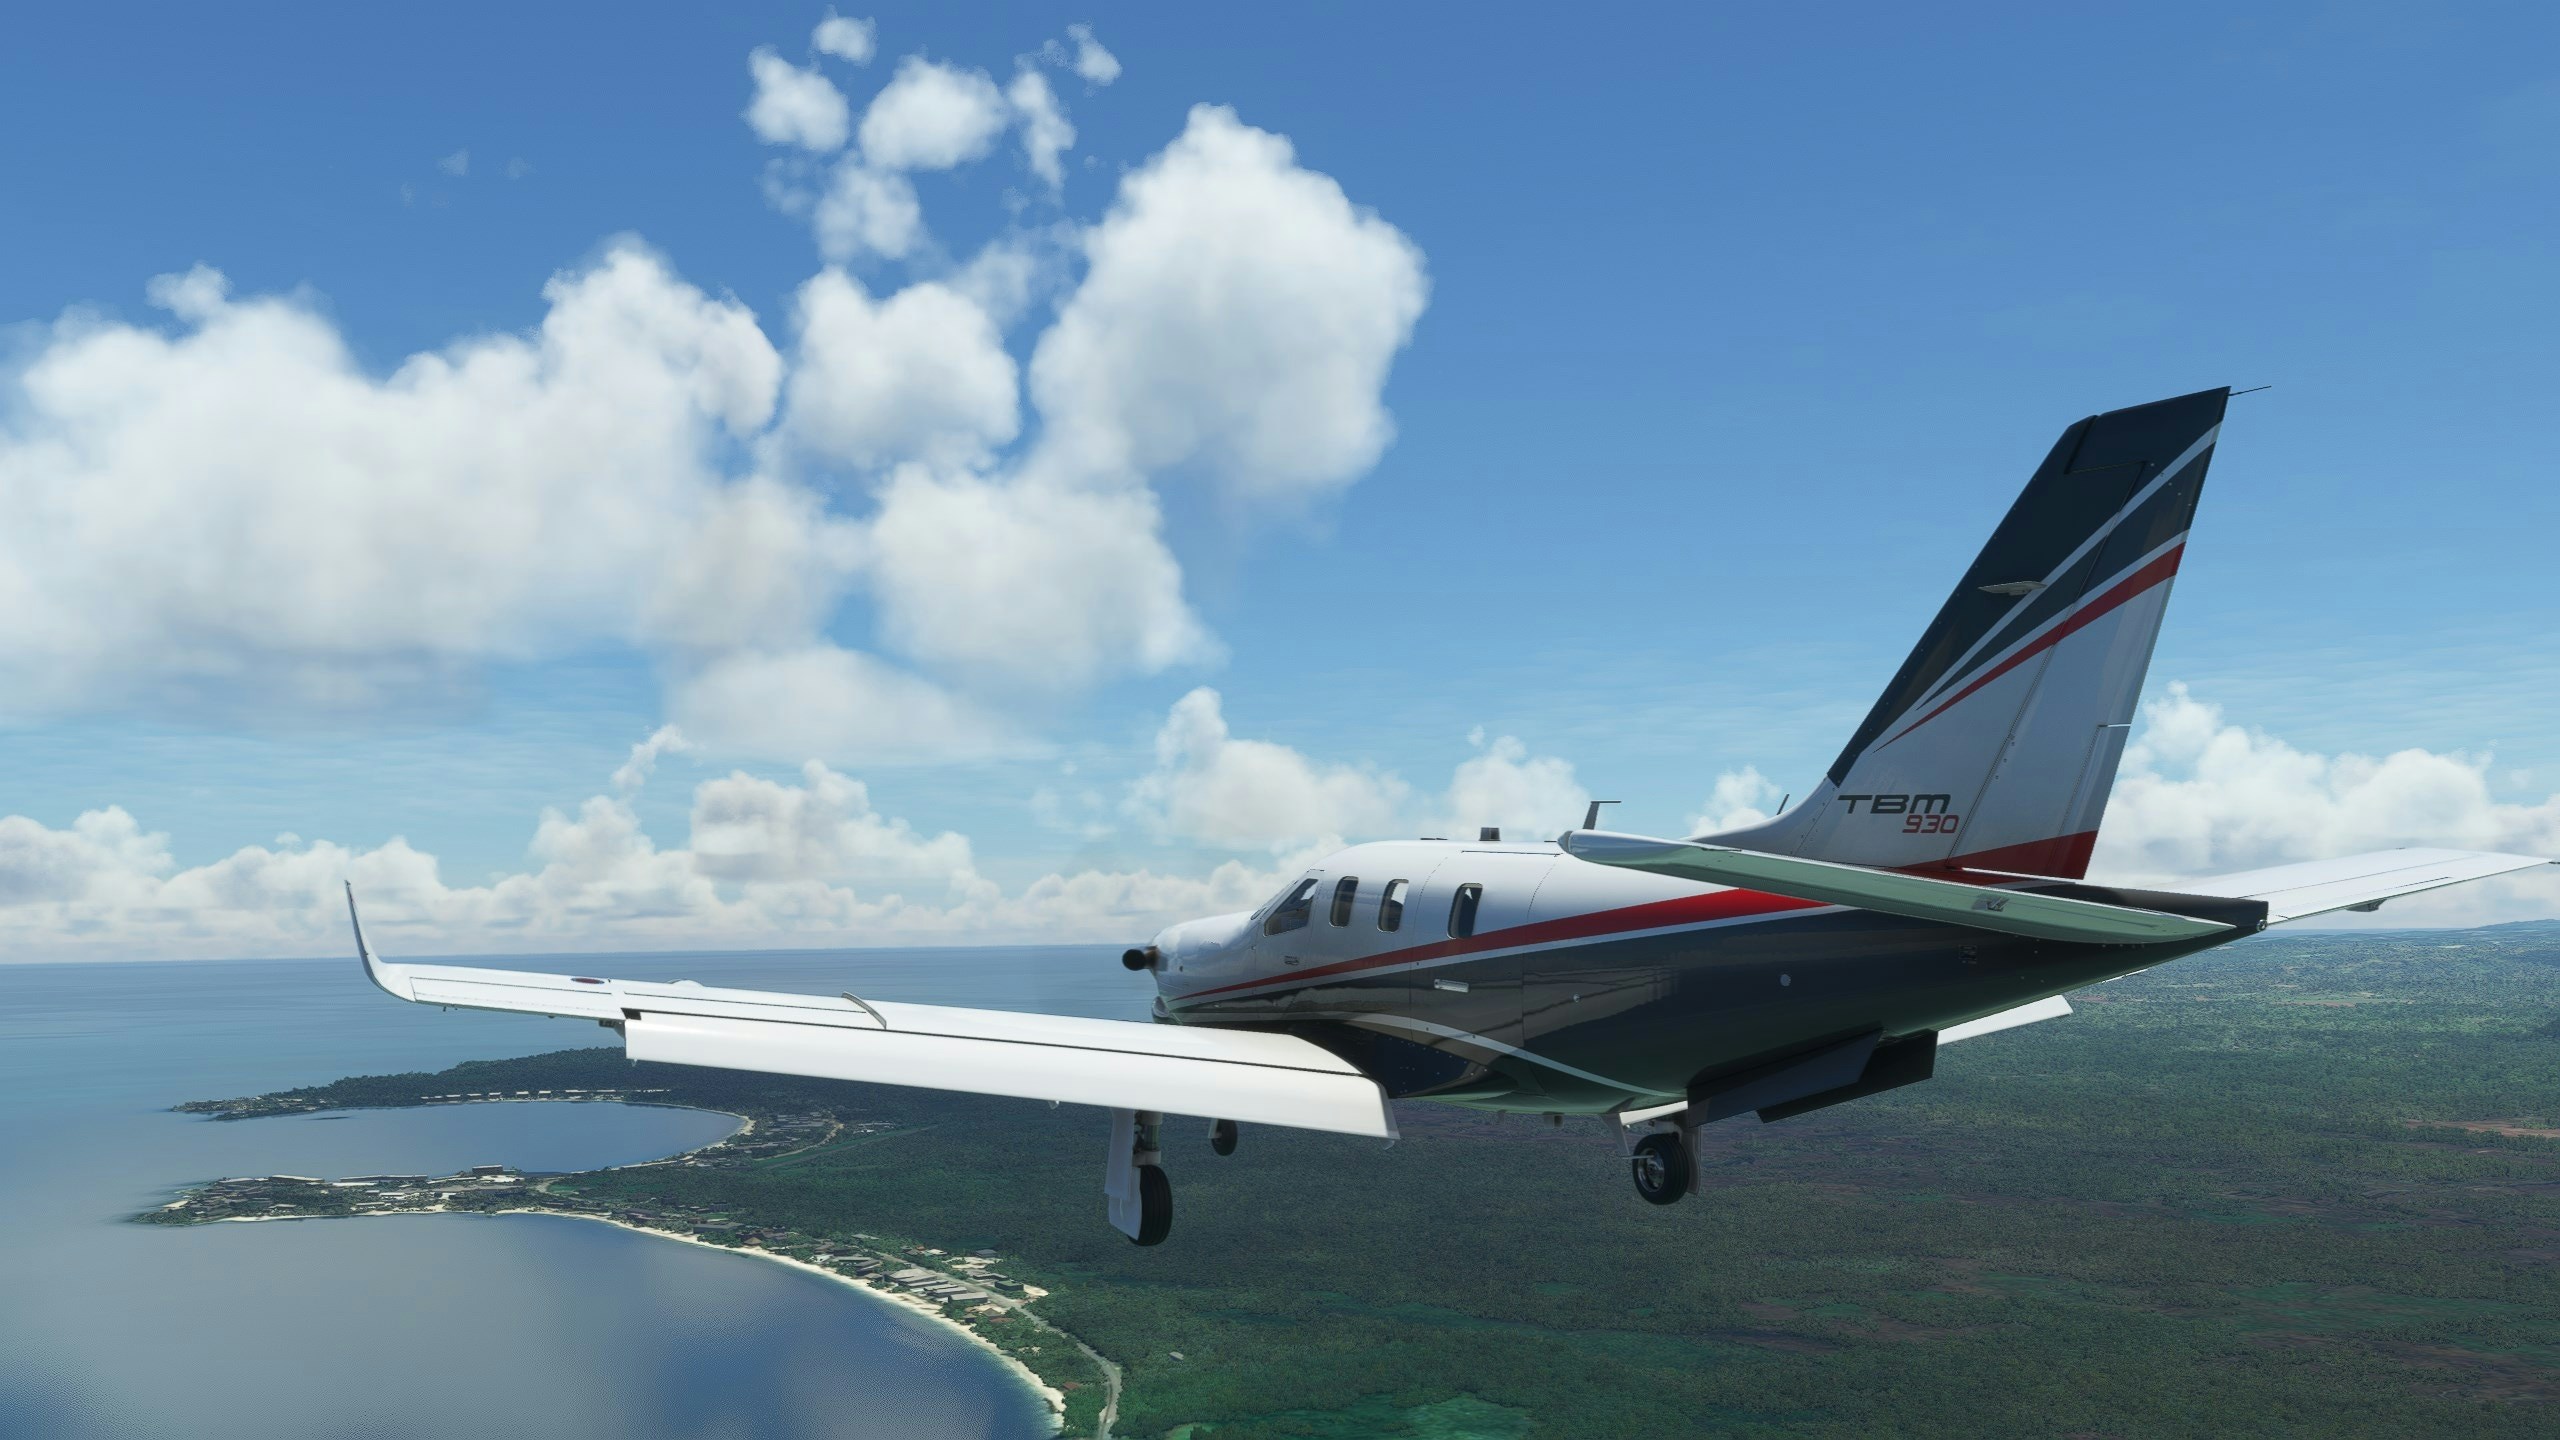 Microsoft Flight Simulator X: Patch's - Service Pack 1 & Service